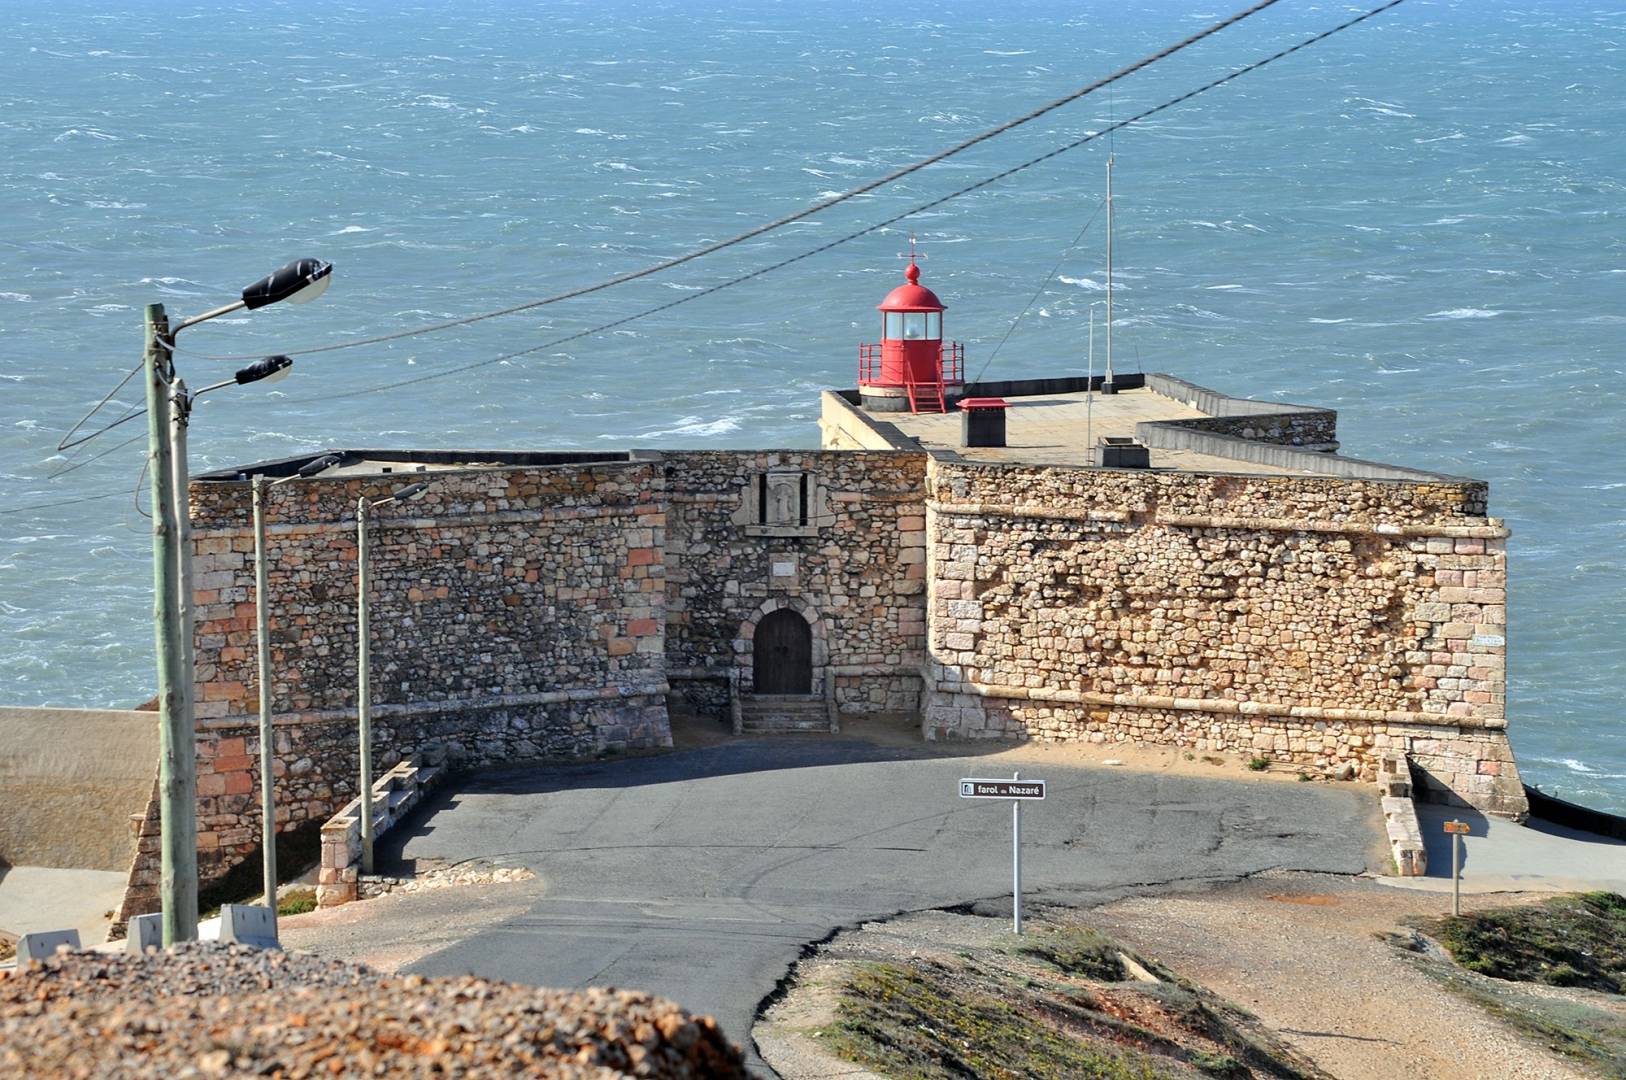 Forte de São Miguel Arcanjo - Nazaré | All About Portugal